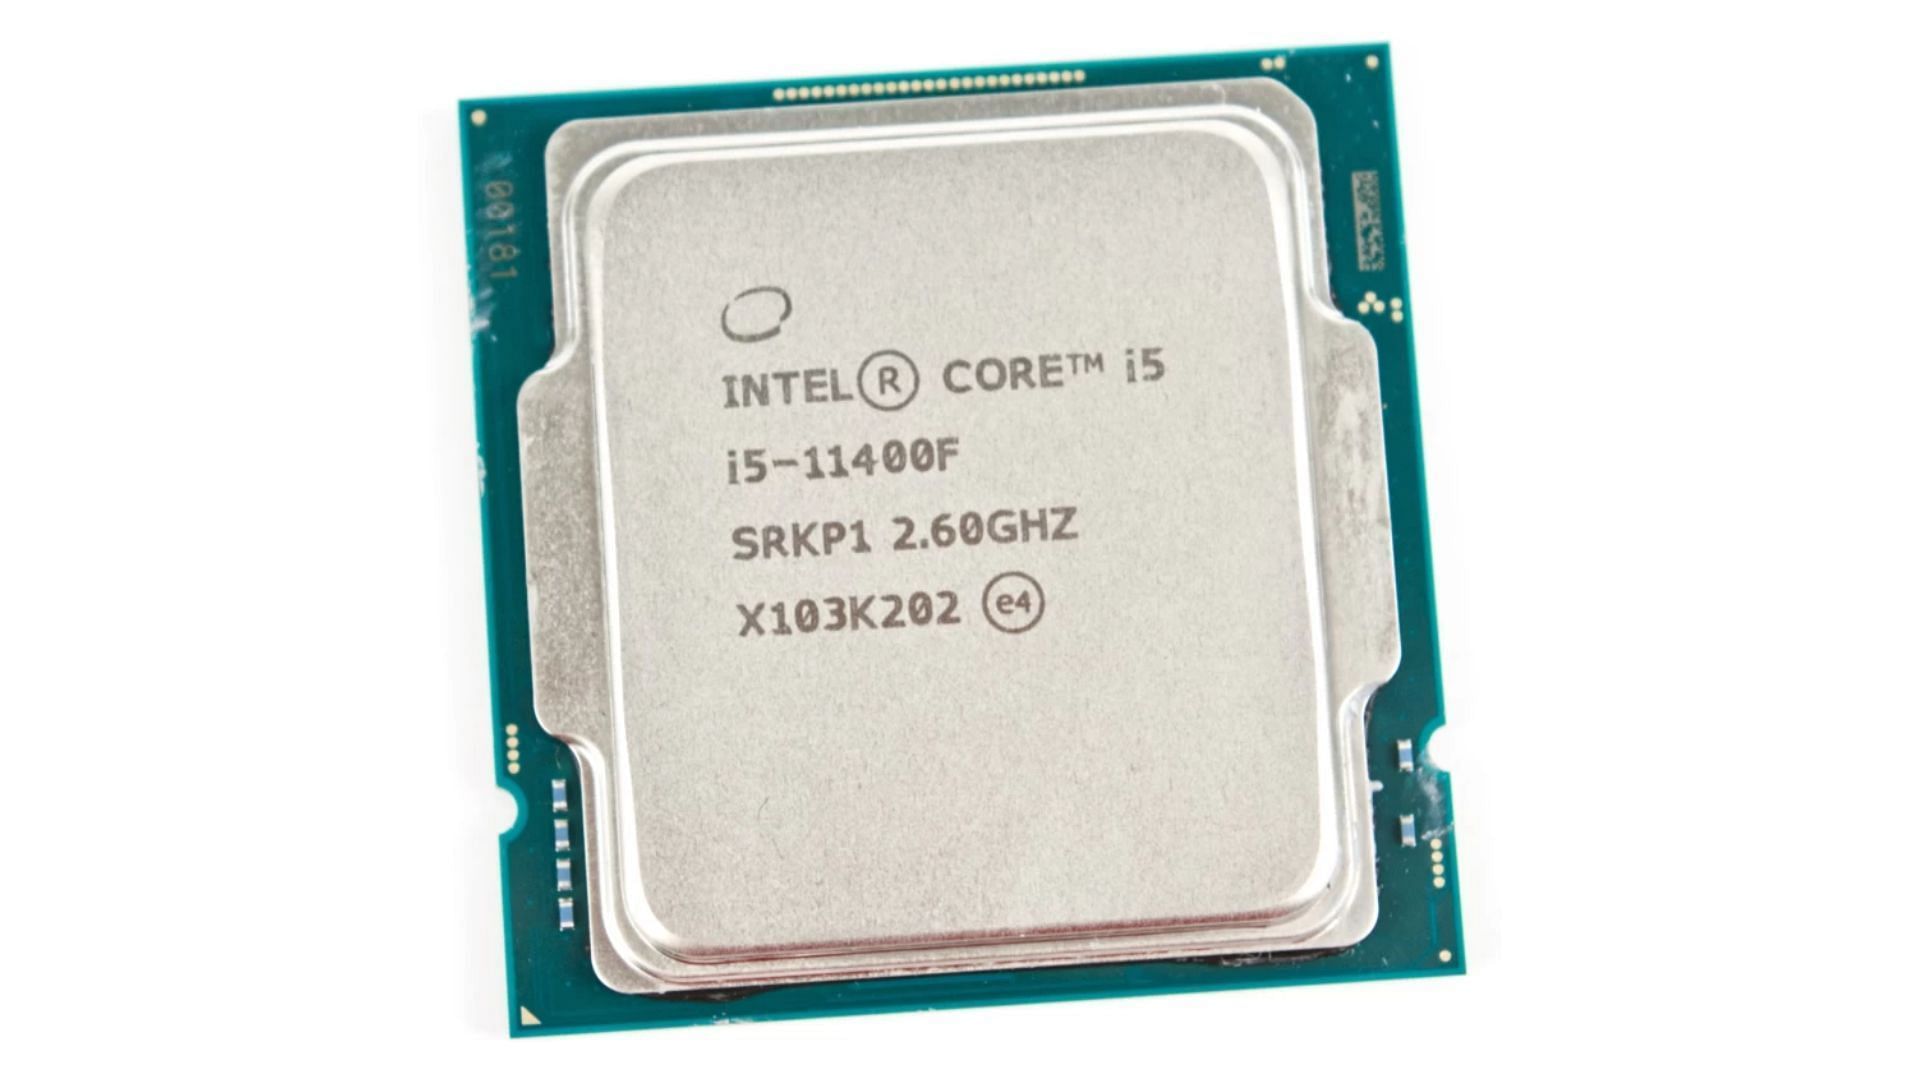 Old chip with excellent performance (Image via Flipkart/Intel)